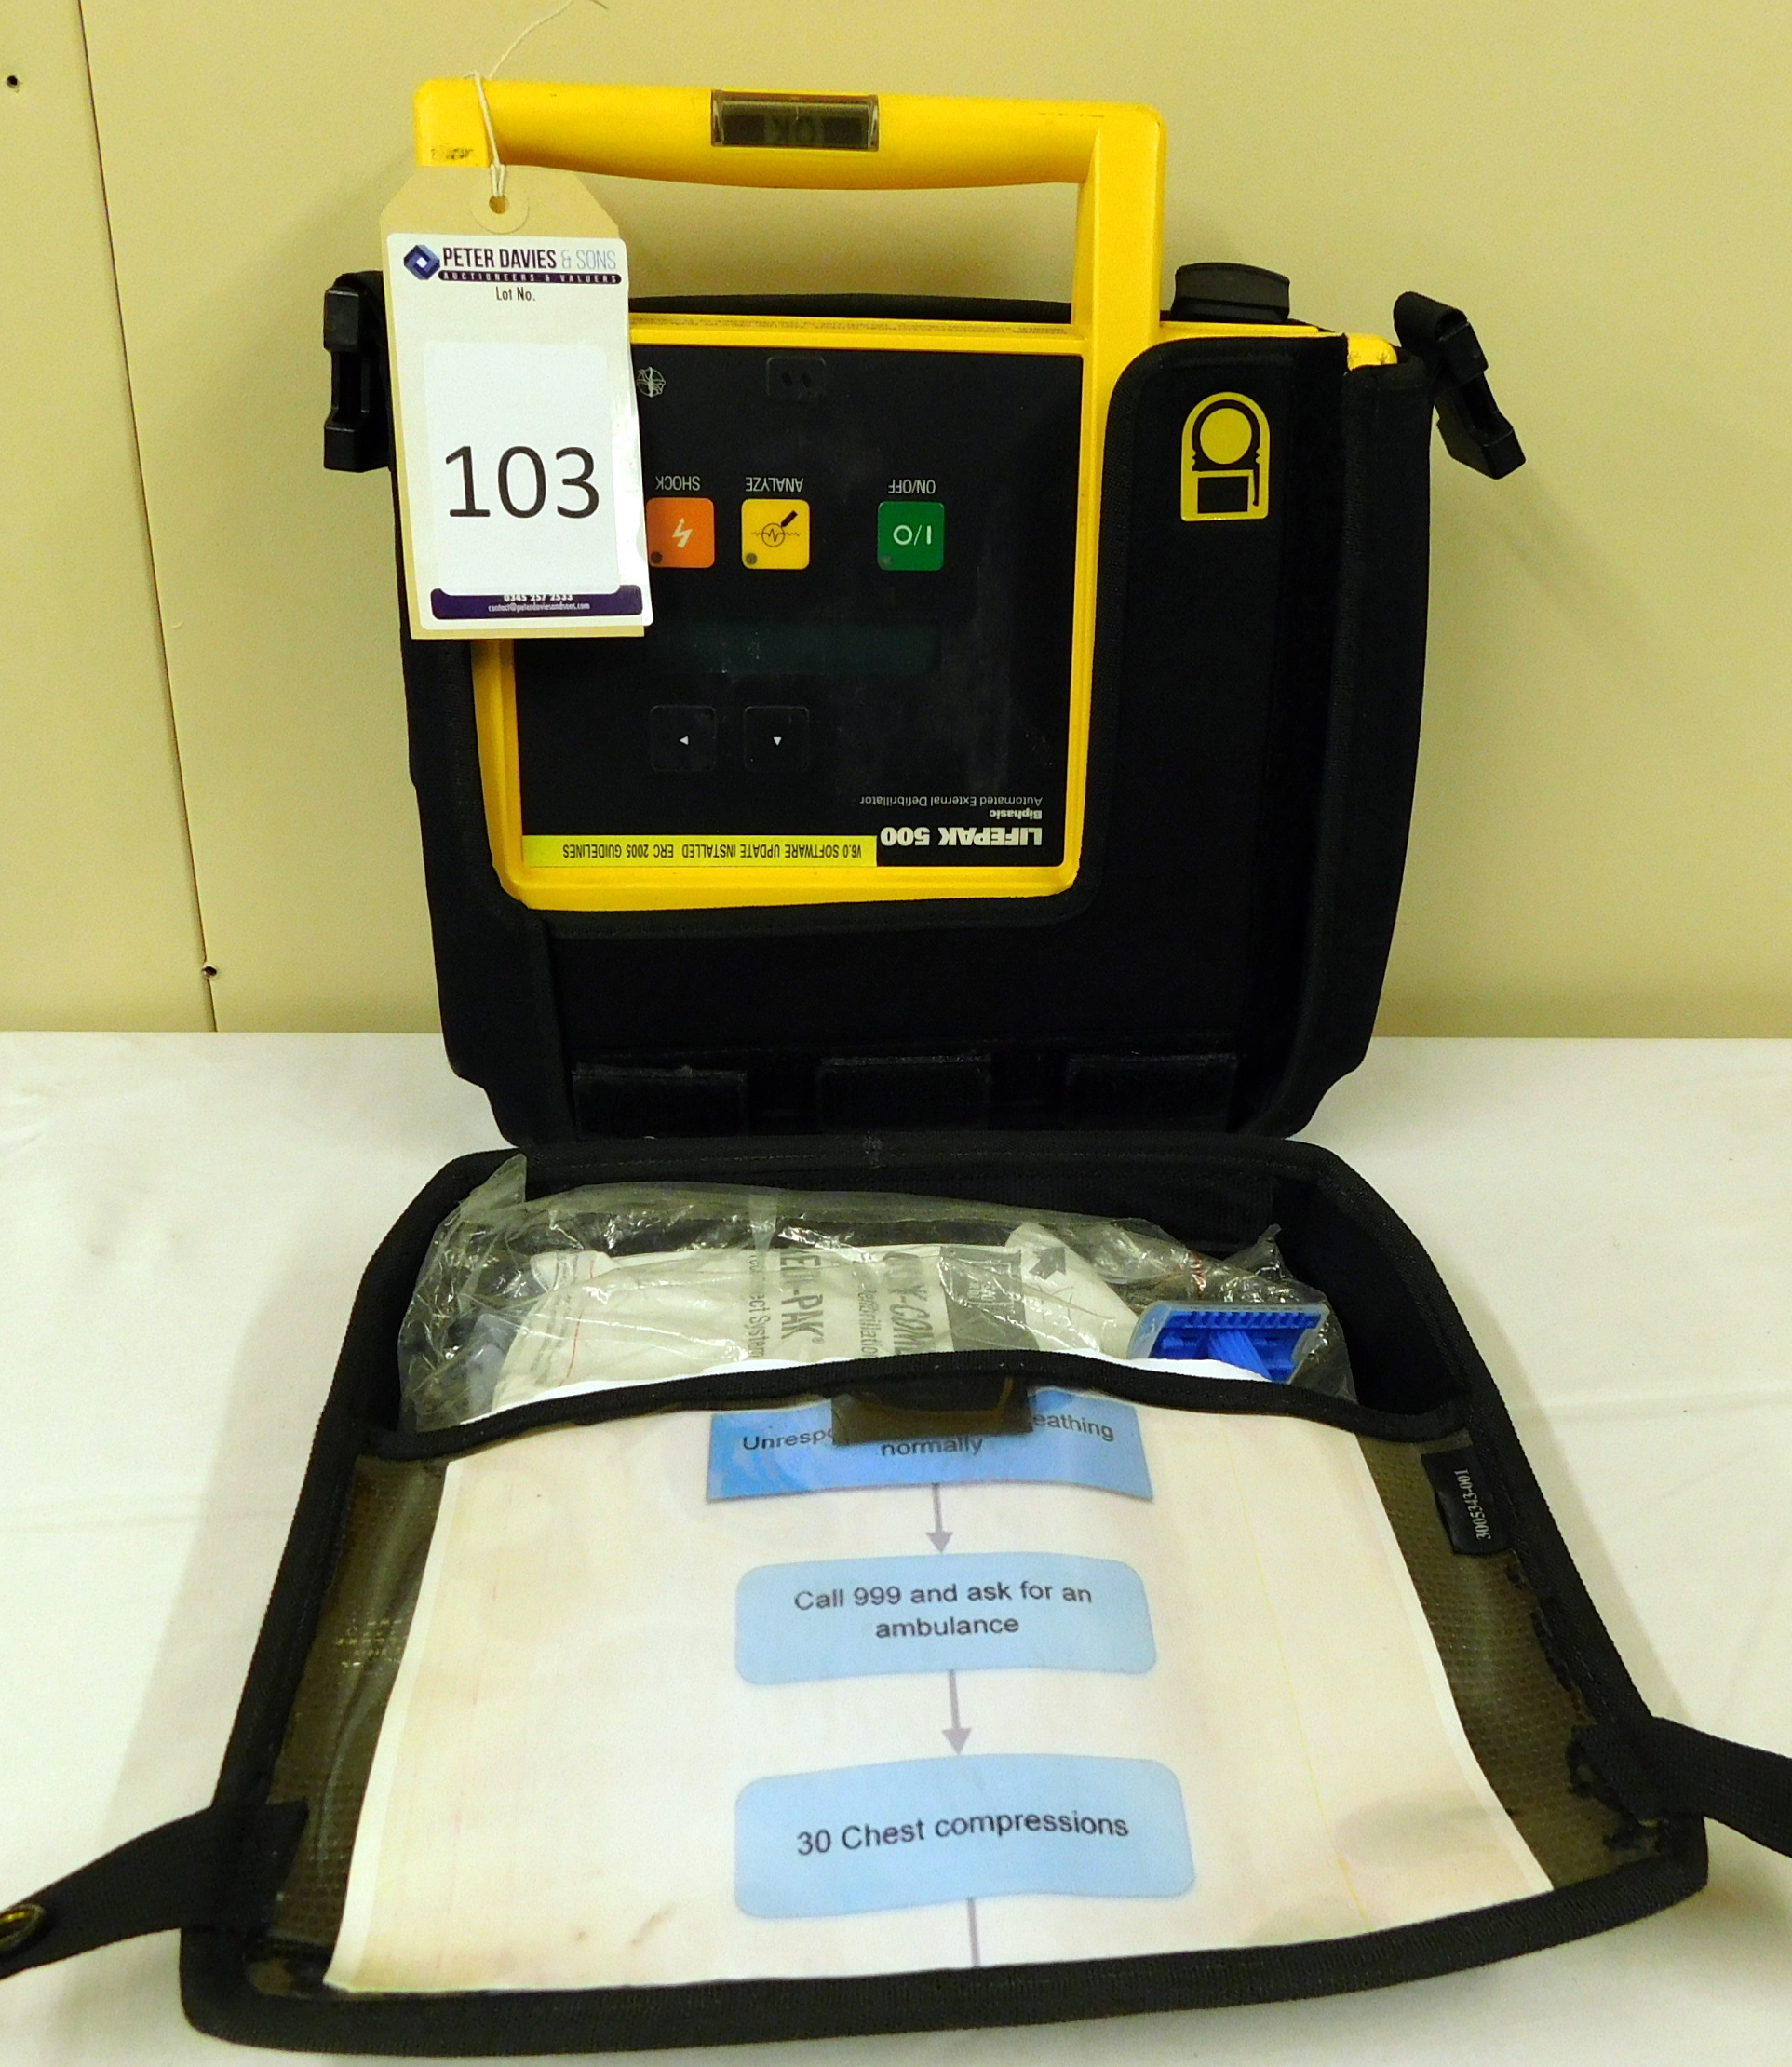 Medtronic Lifepak 500 Defibrillator, Serial Number: 33069250, Asset Number: 1005000665, Year: 200